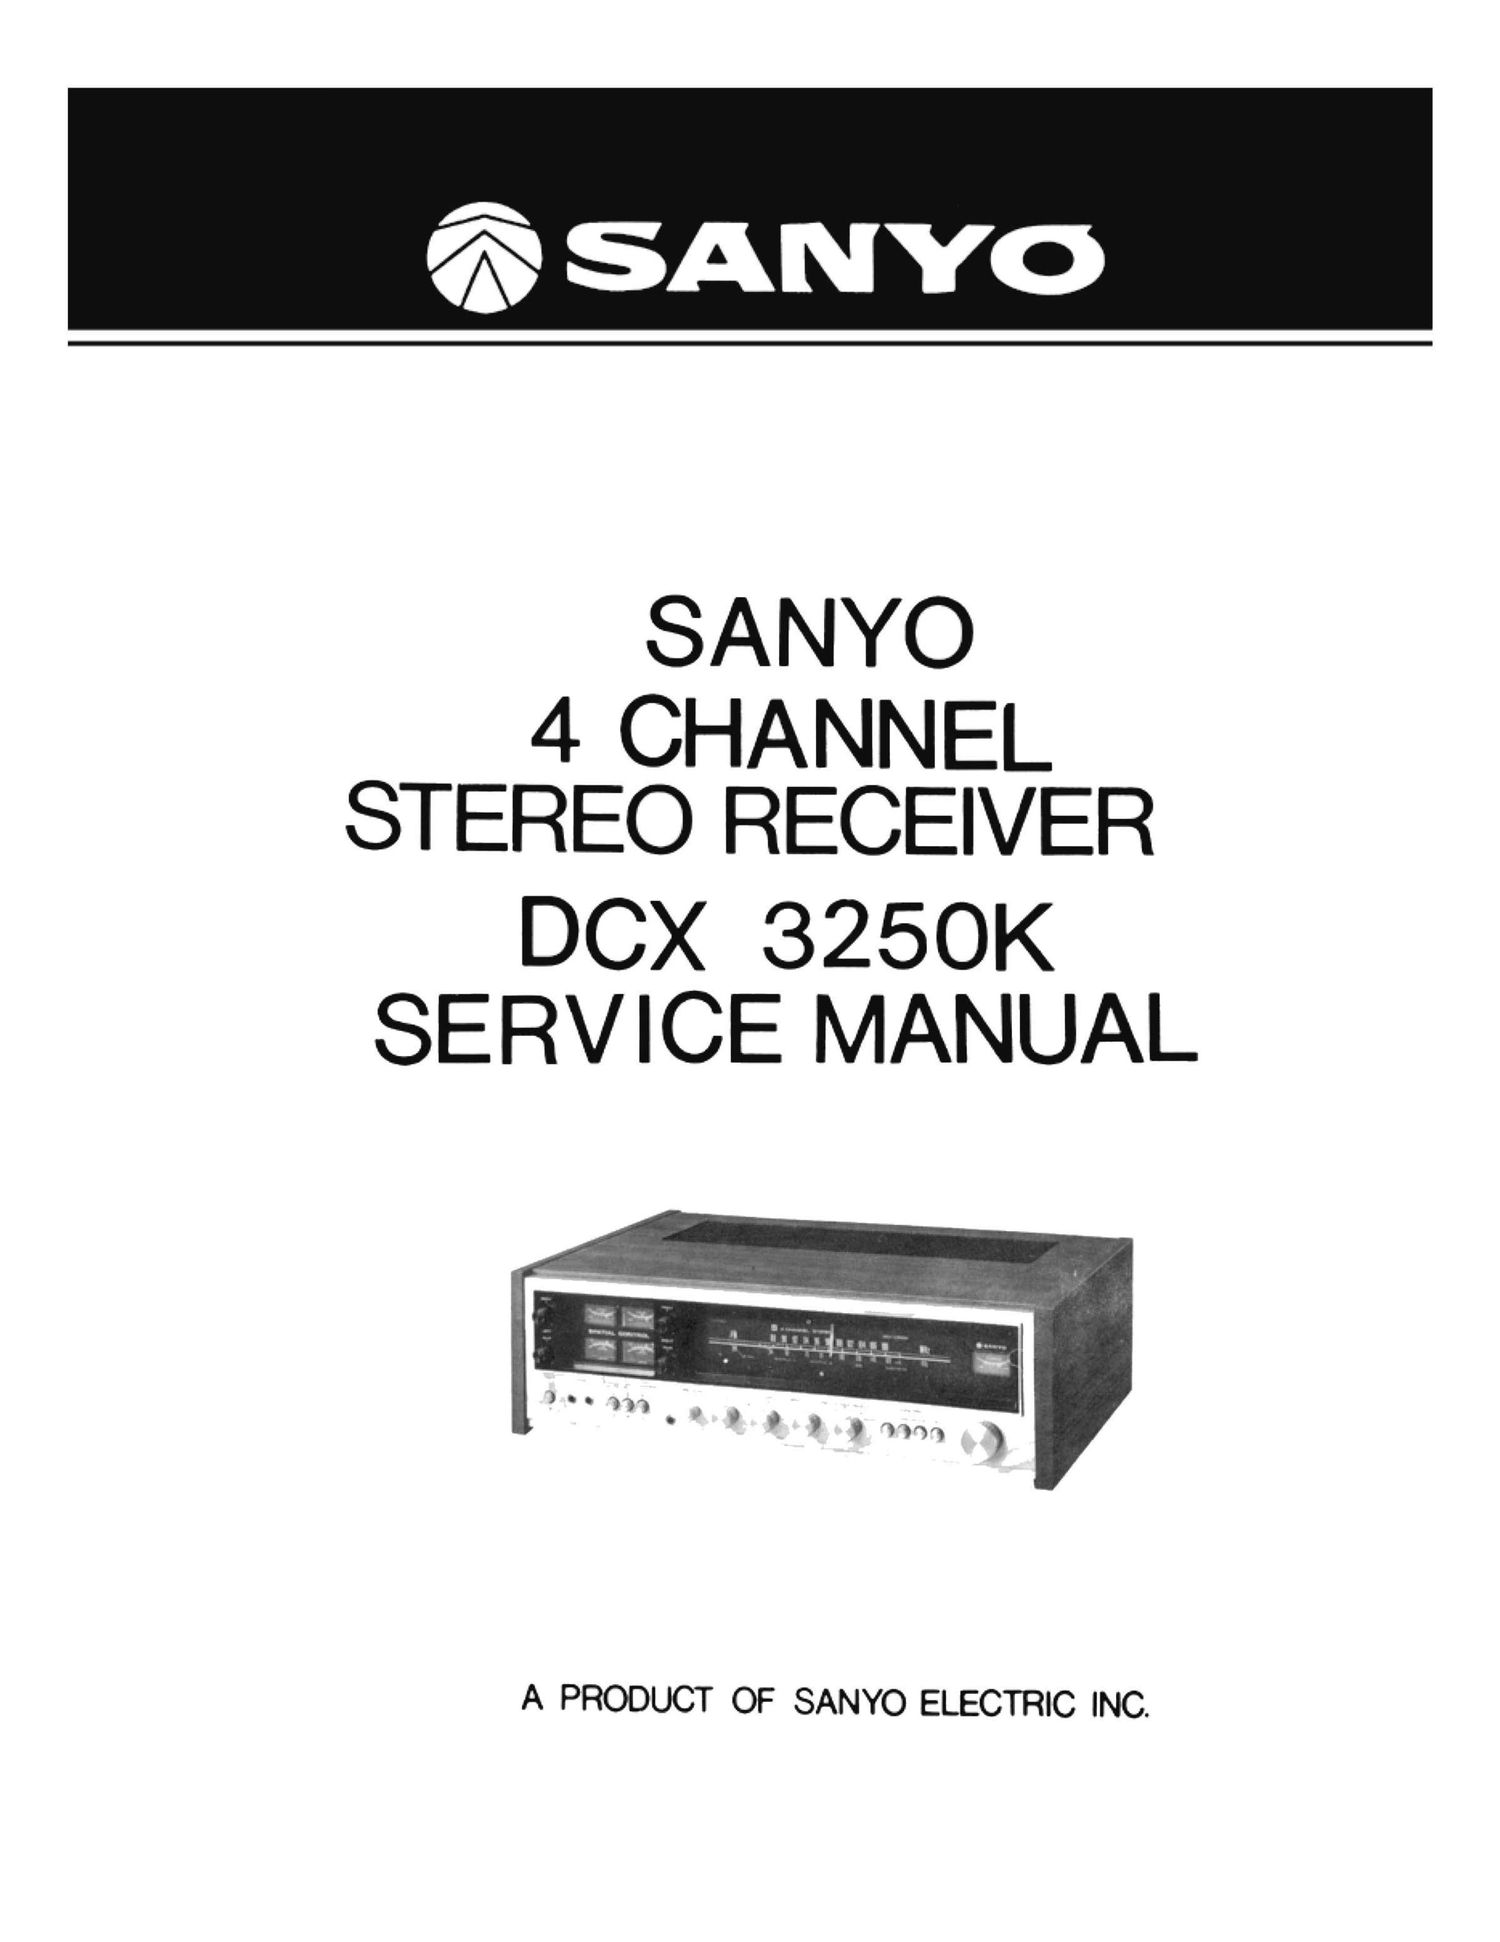 Sanyo DCX 3250K Service Manual